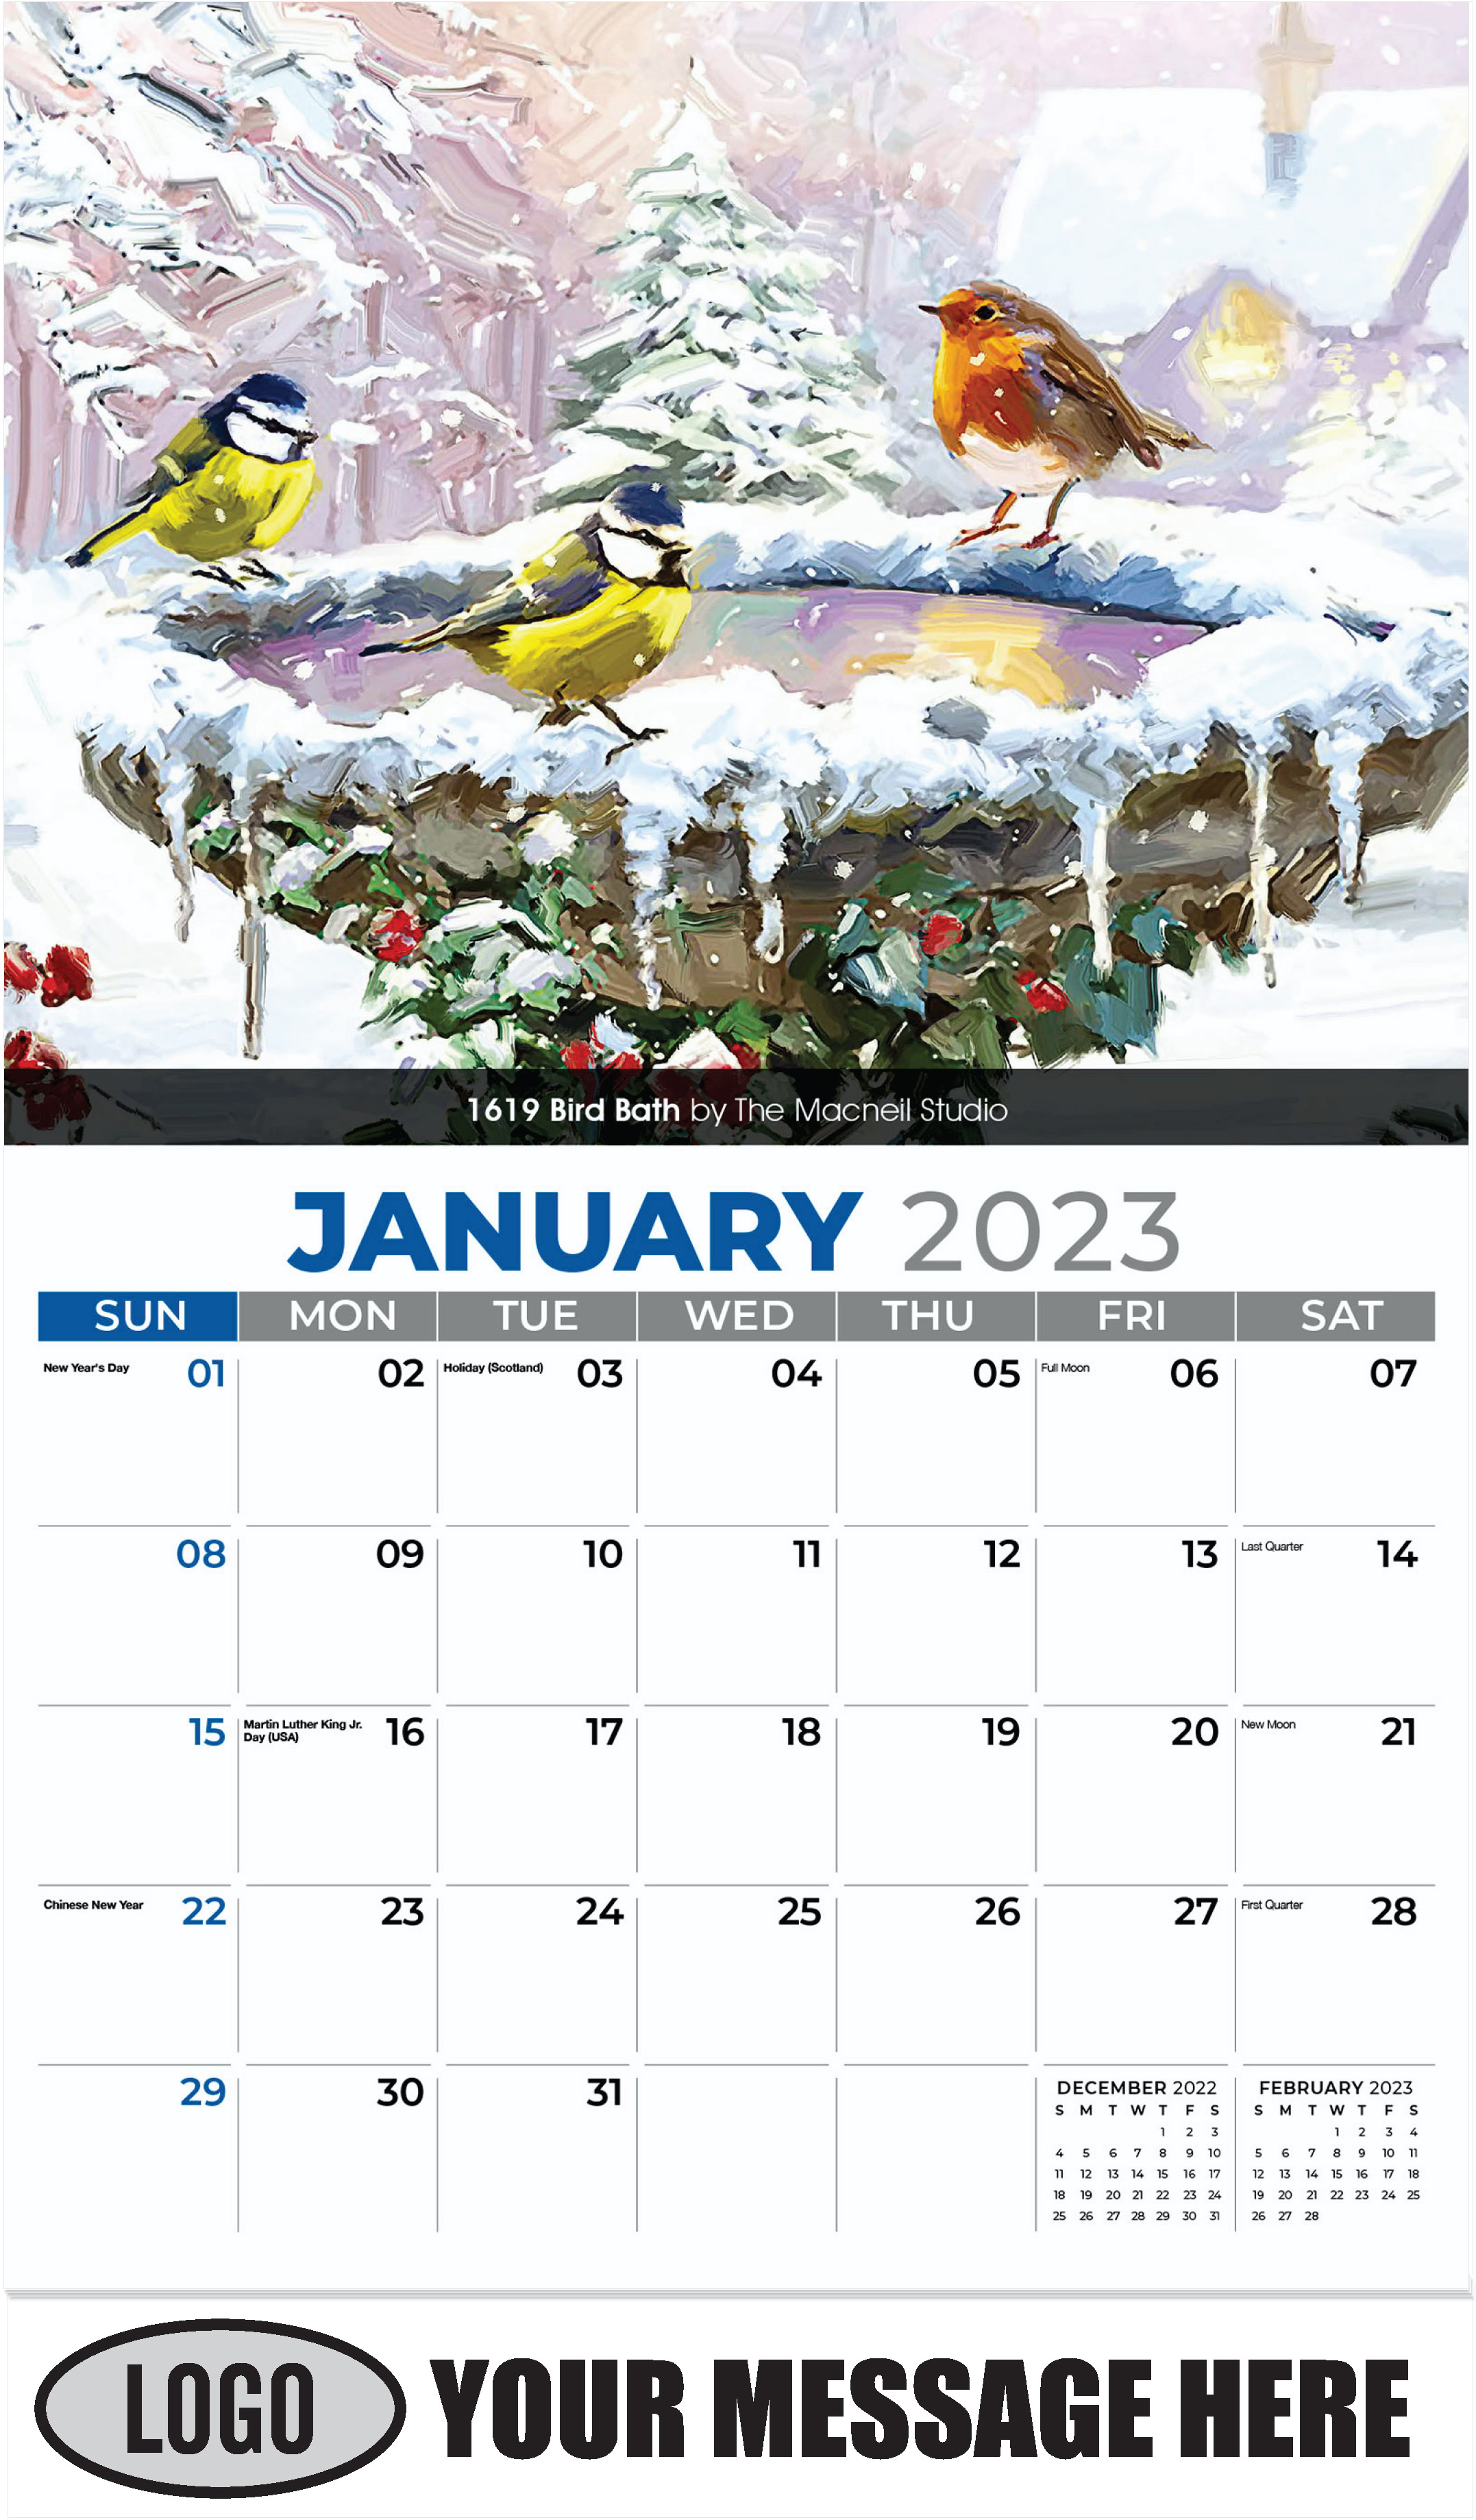 1619 Bird Bath by The Macneil Studio - January - Garden Birds 2023 Promotional Calendar